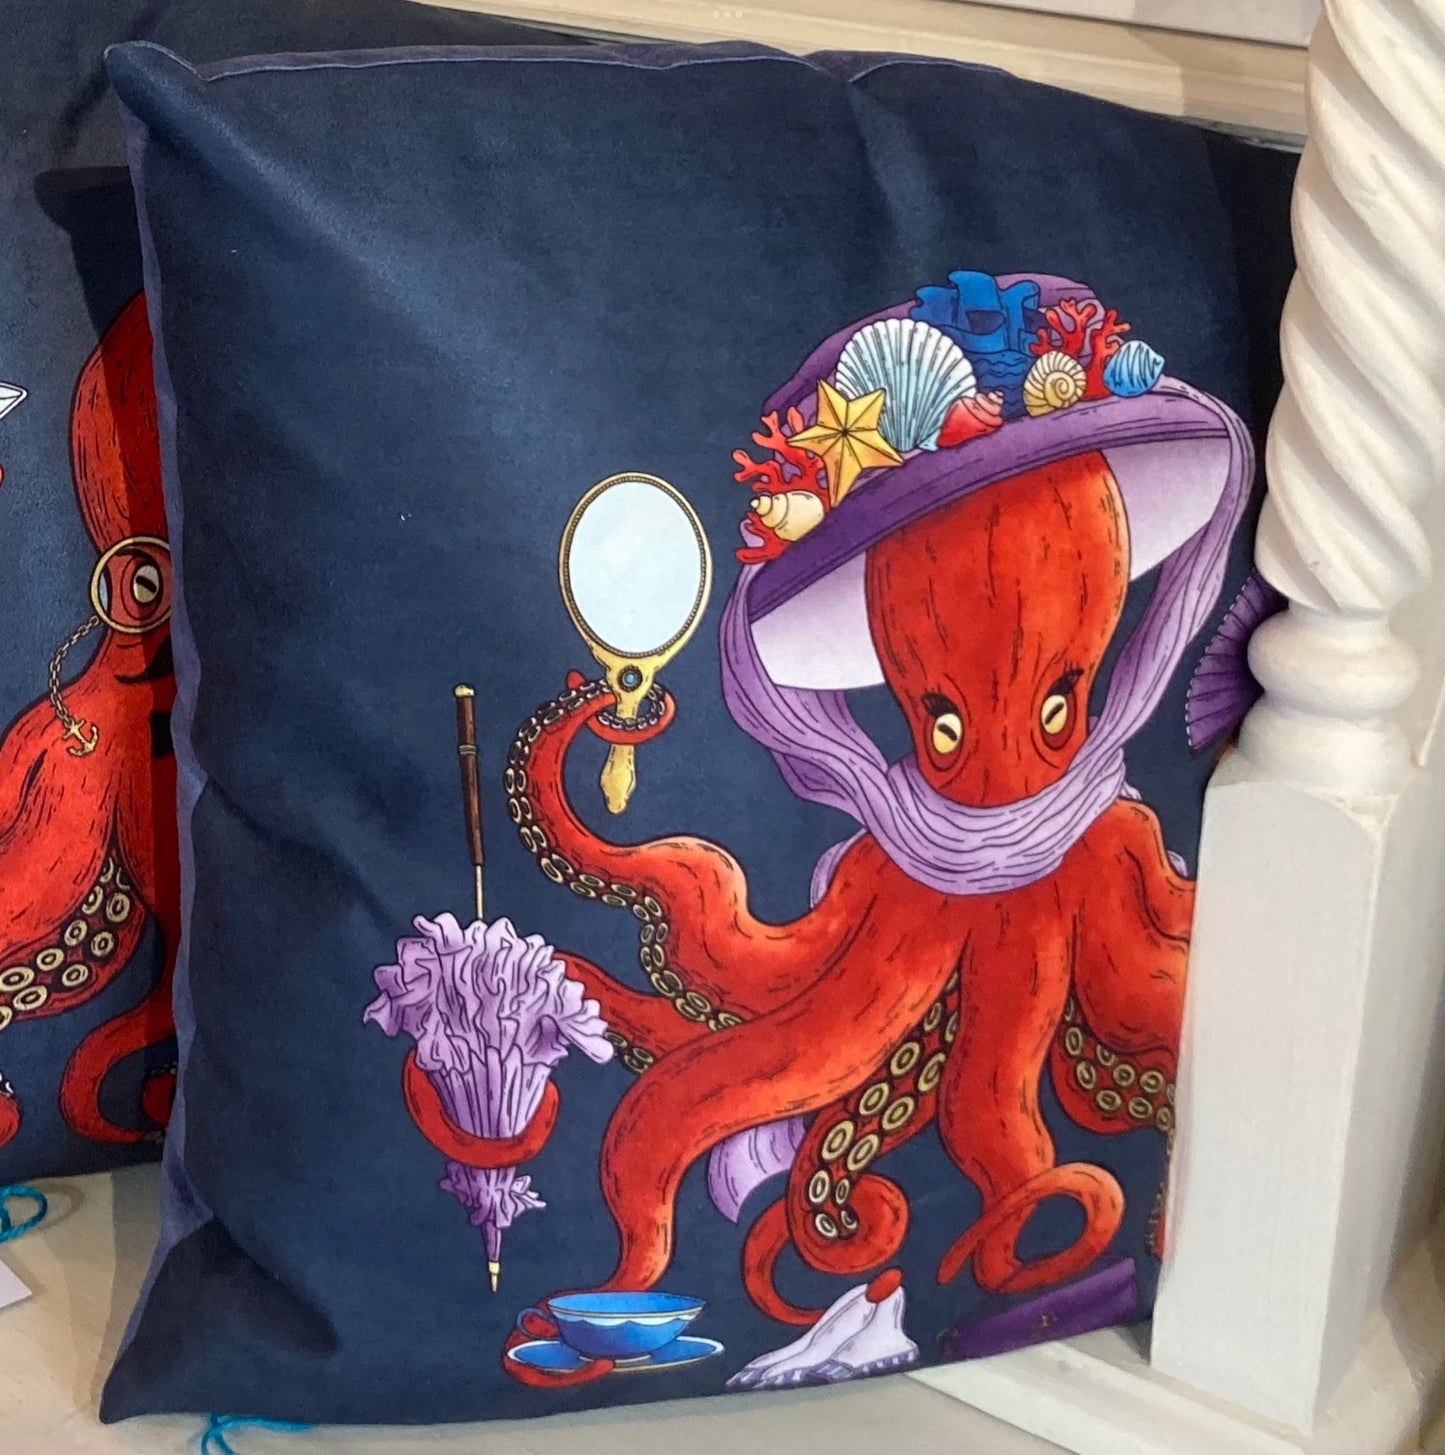 Deeply Dainty Octopus Cushion